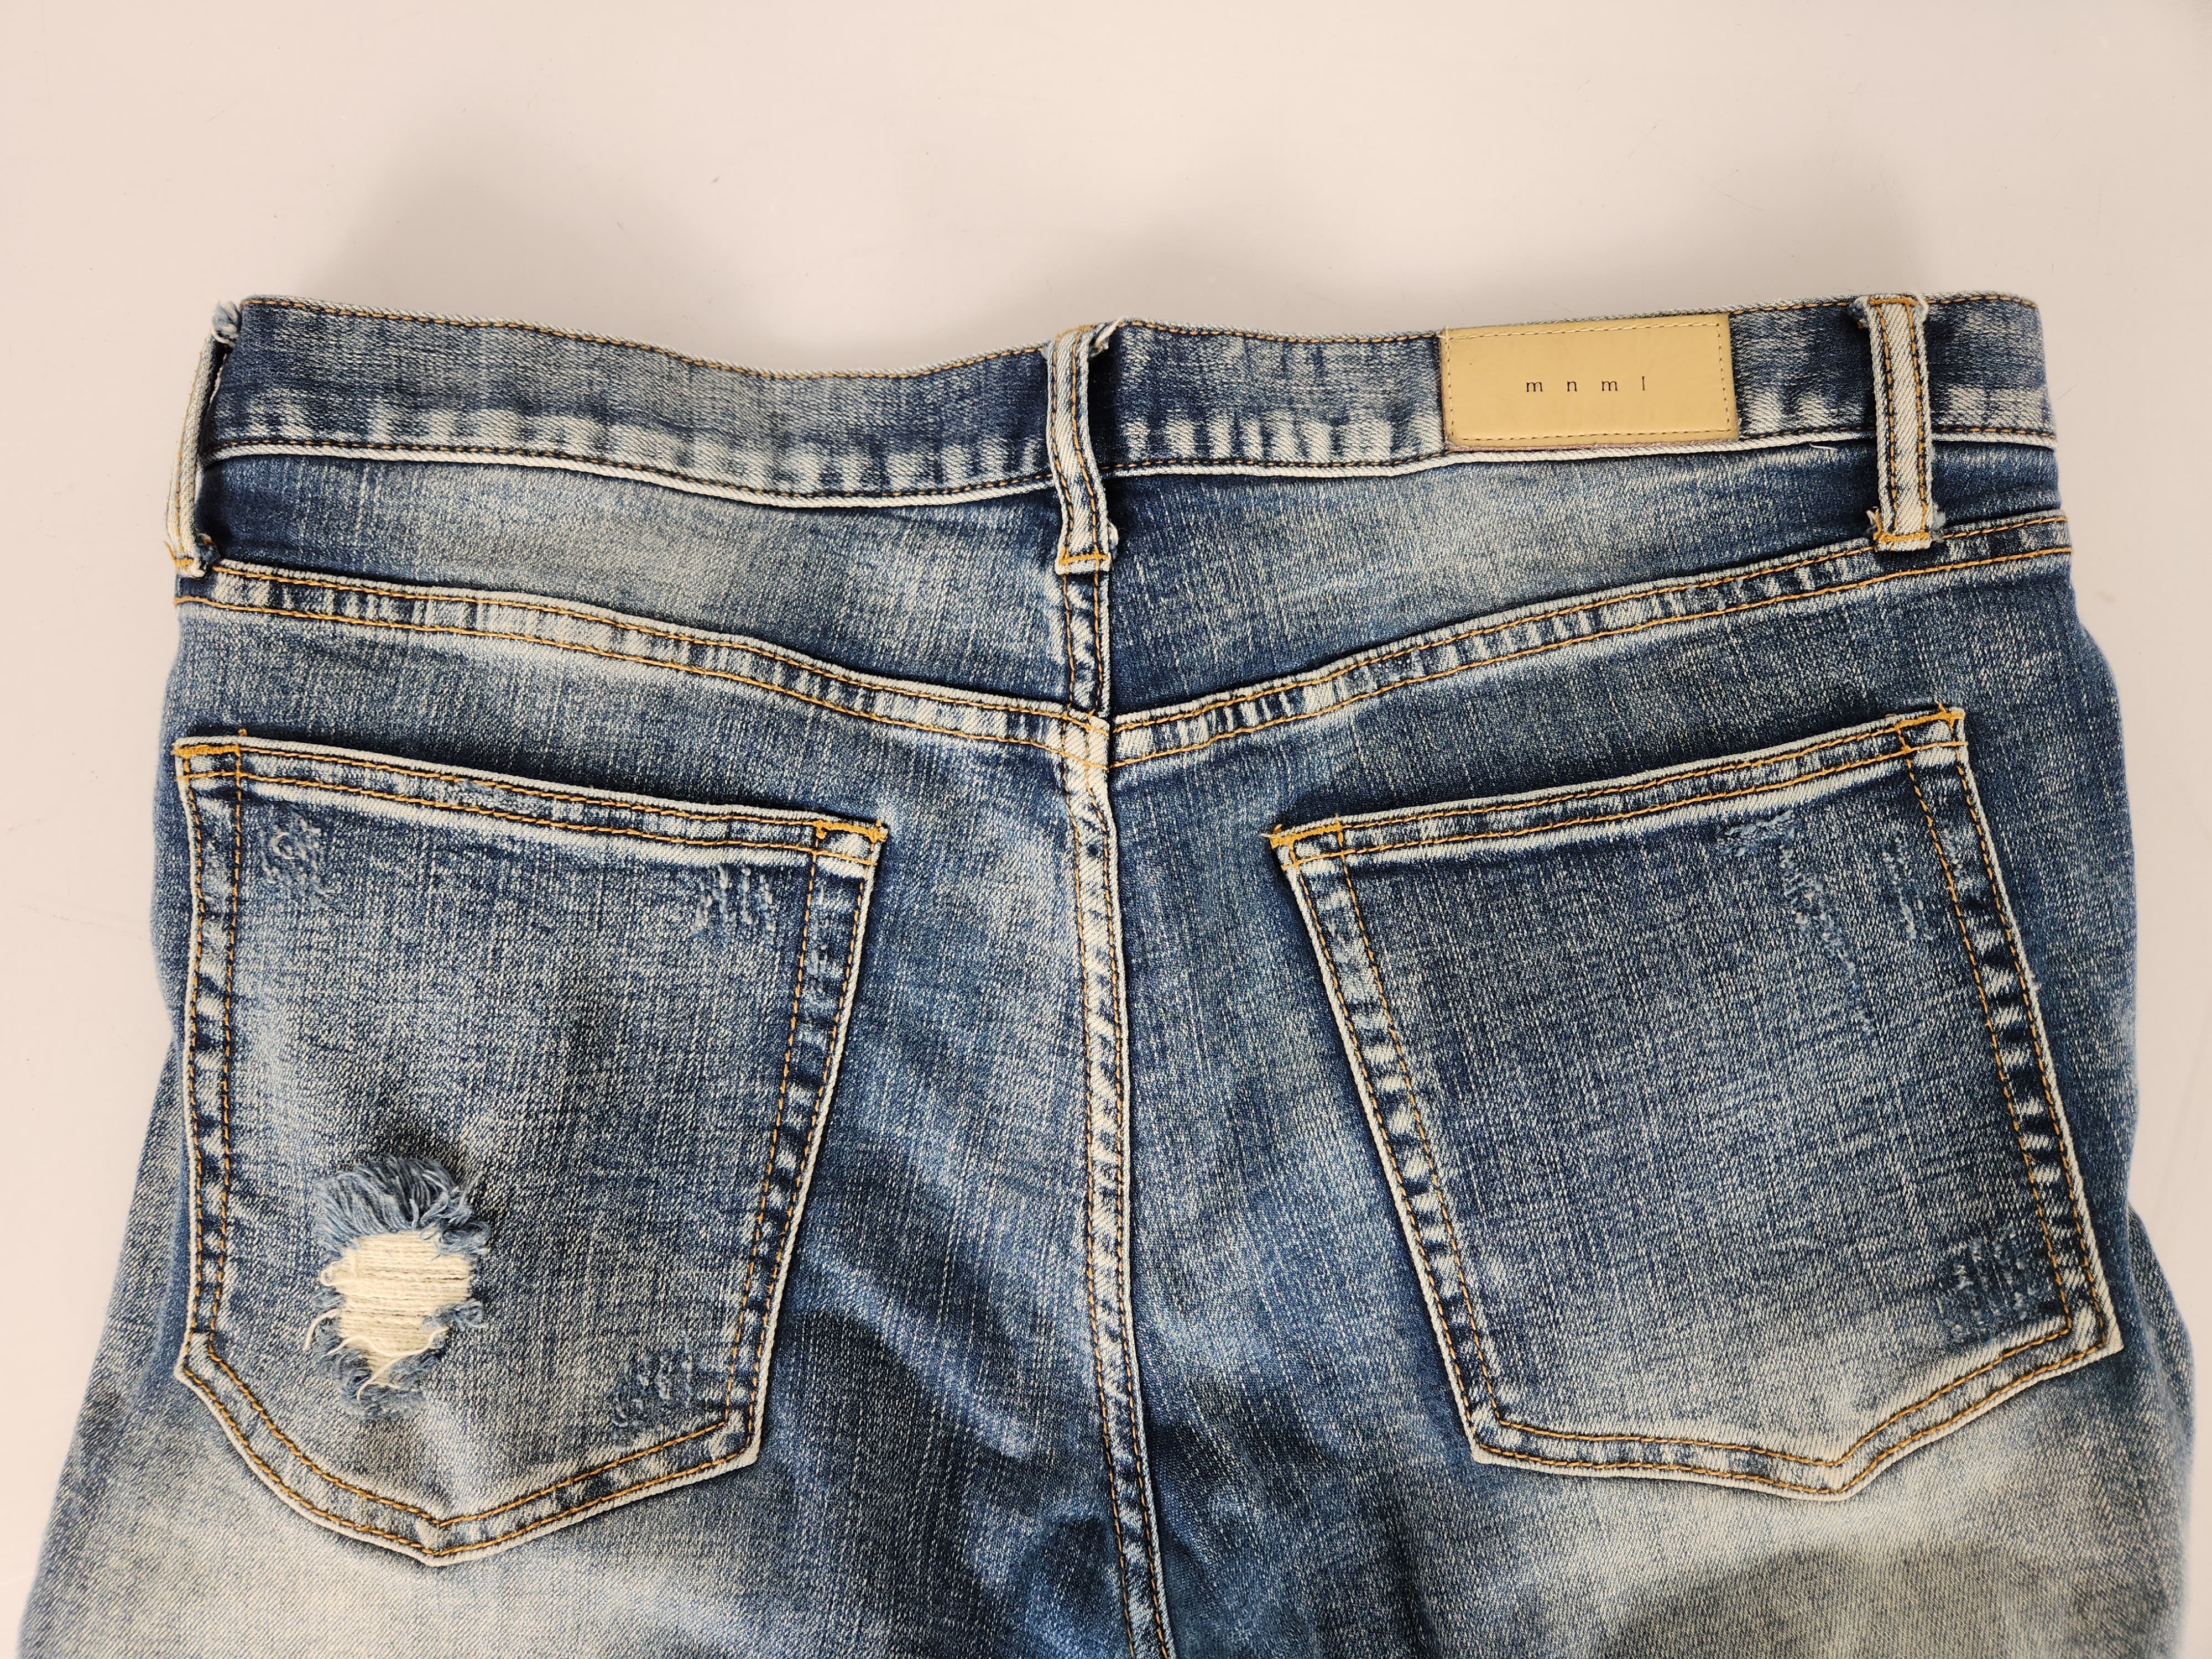 MNMI Distressed Denim Jeans Men's Size 36x33